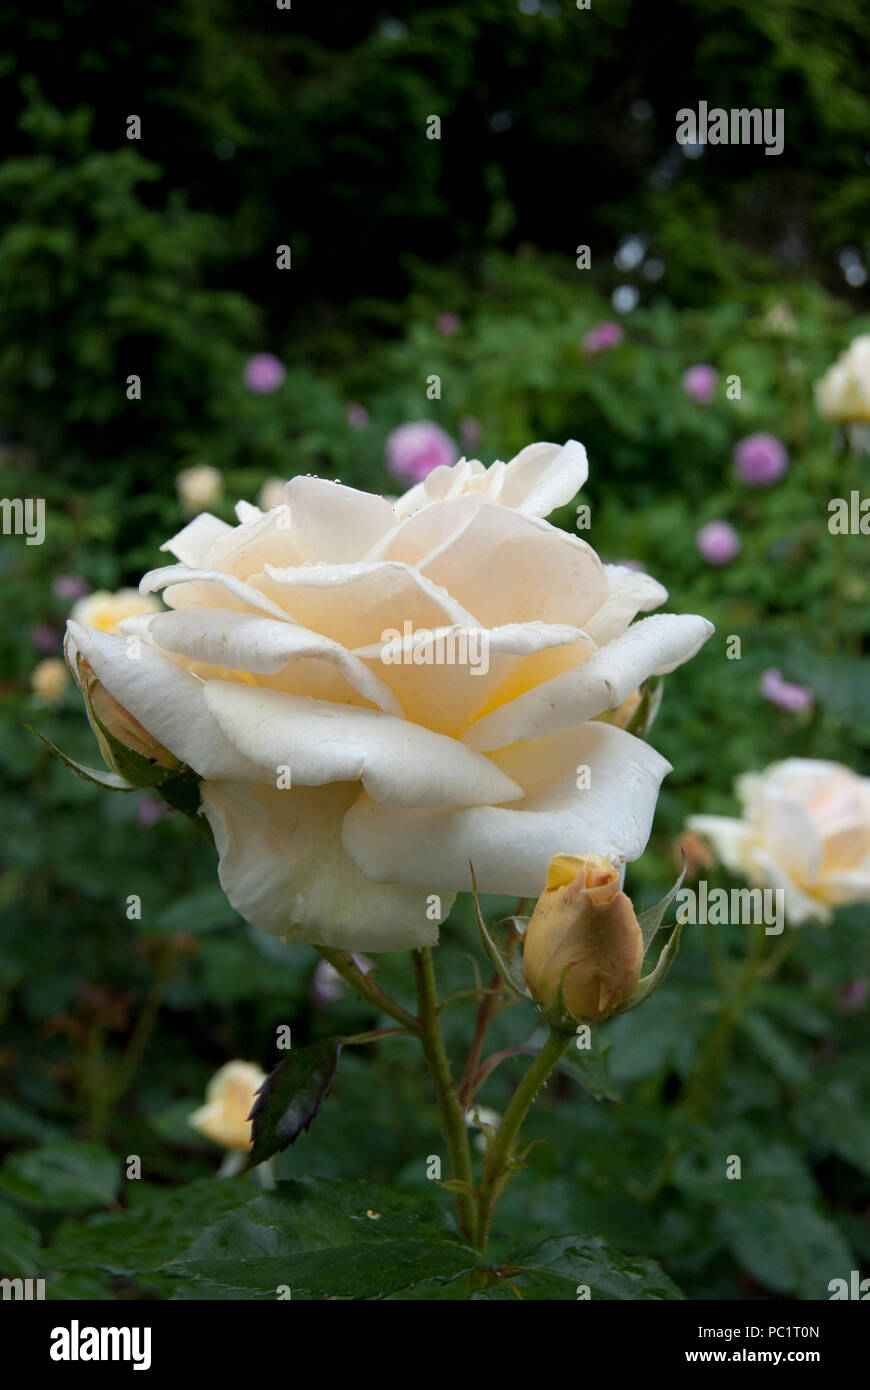 Portrait of a white rose flower in the Bern Rose Gardens, Bern, Switzerland  Stock Photo - Alamy